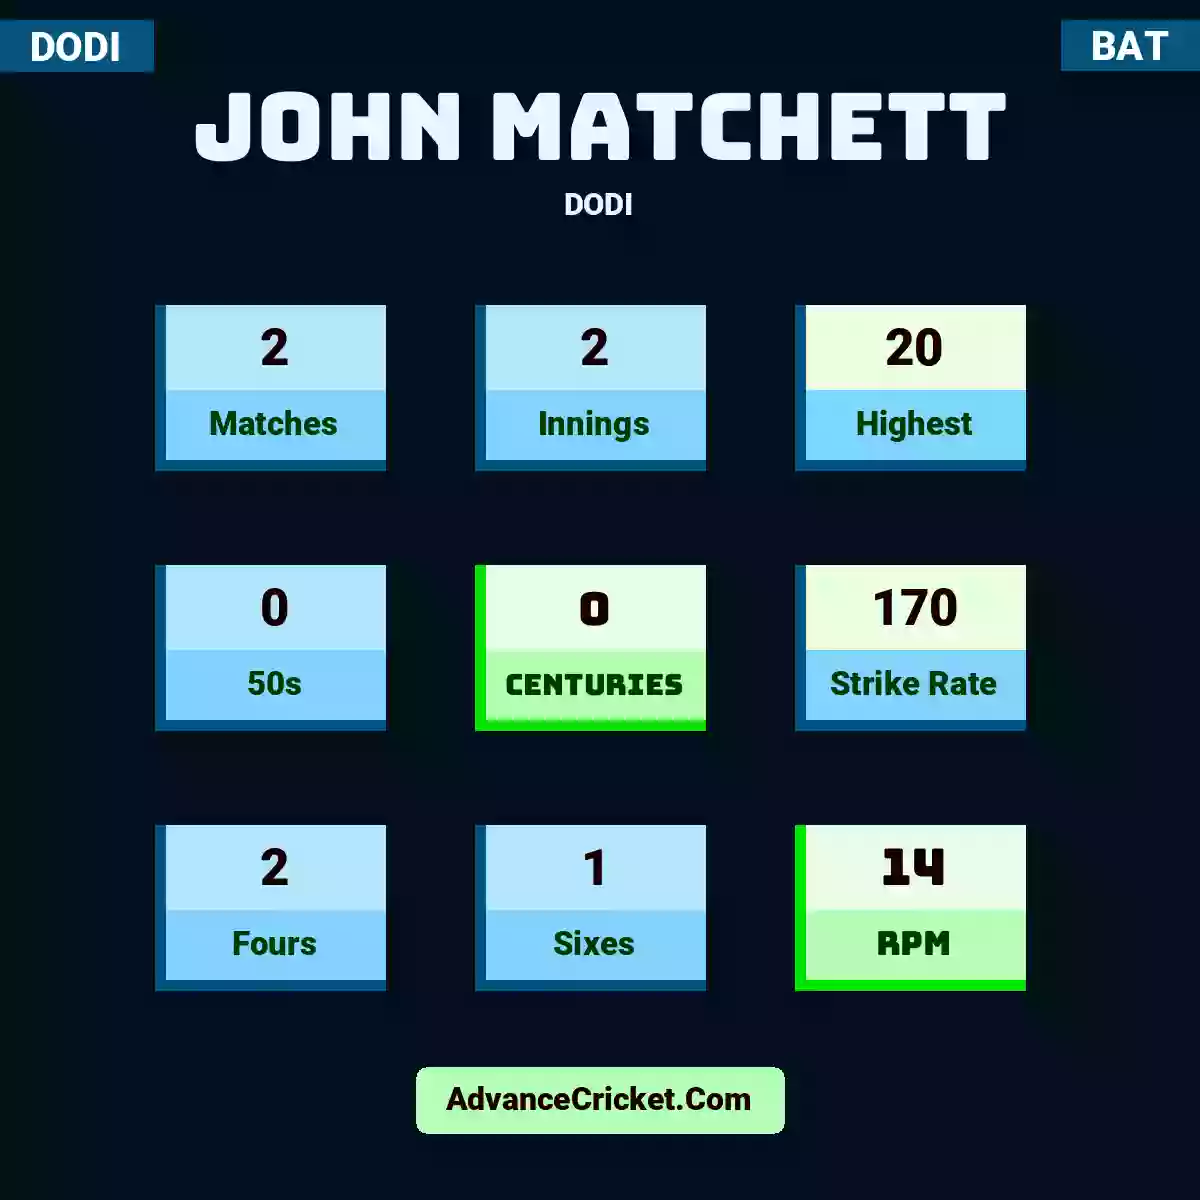 John Matchett DODI , John Matchett played 2 matches, scored 20 runs as highest, 0 half-centuries, and 0 centuries, with a strike rate of 170. J.Matchett hit 2 fours and 1 sixes, with an RPM of 14.